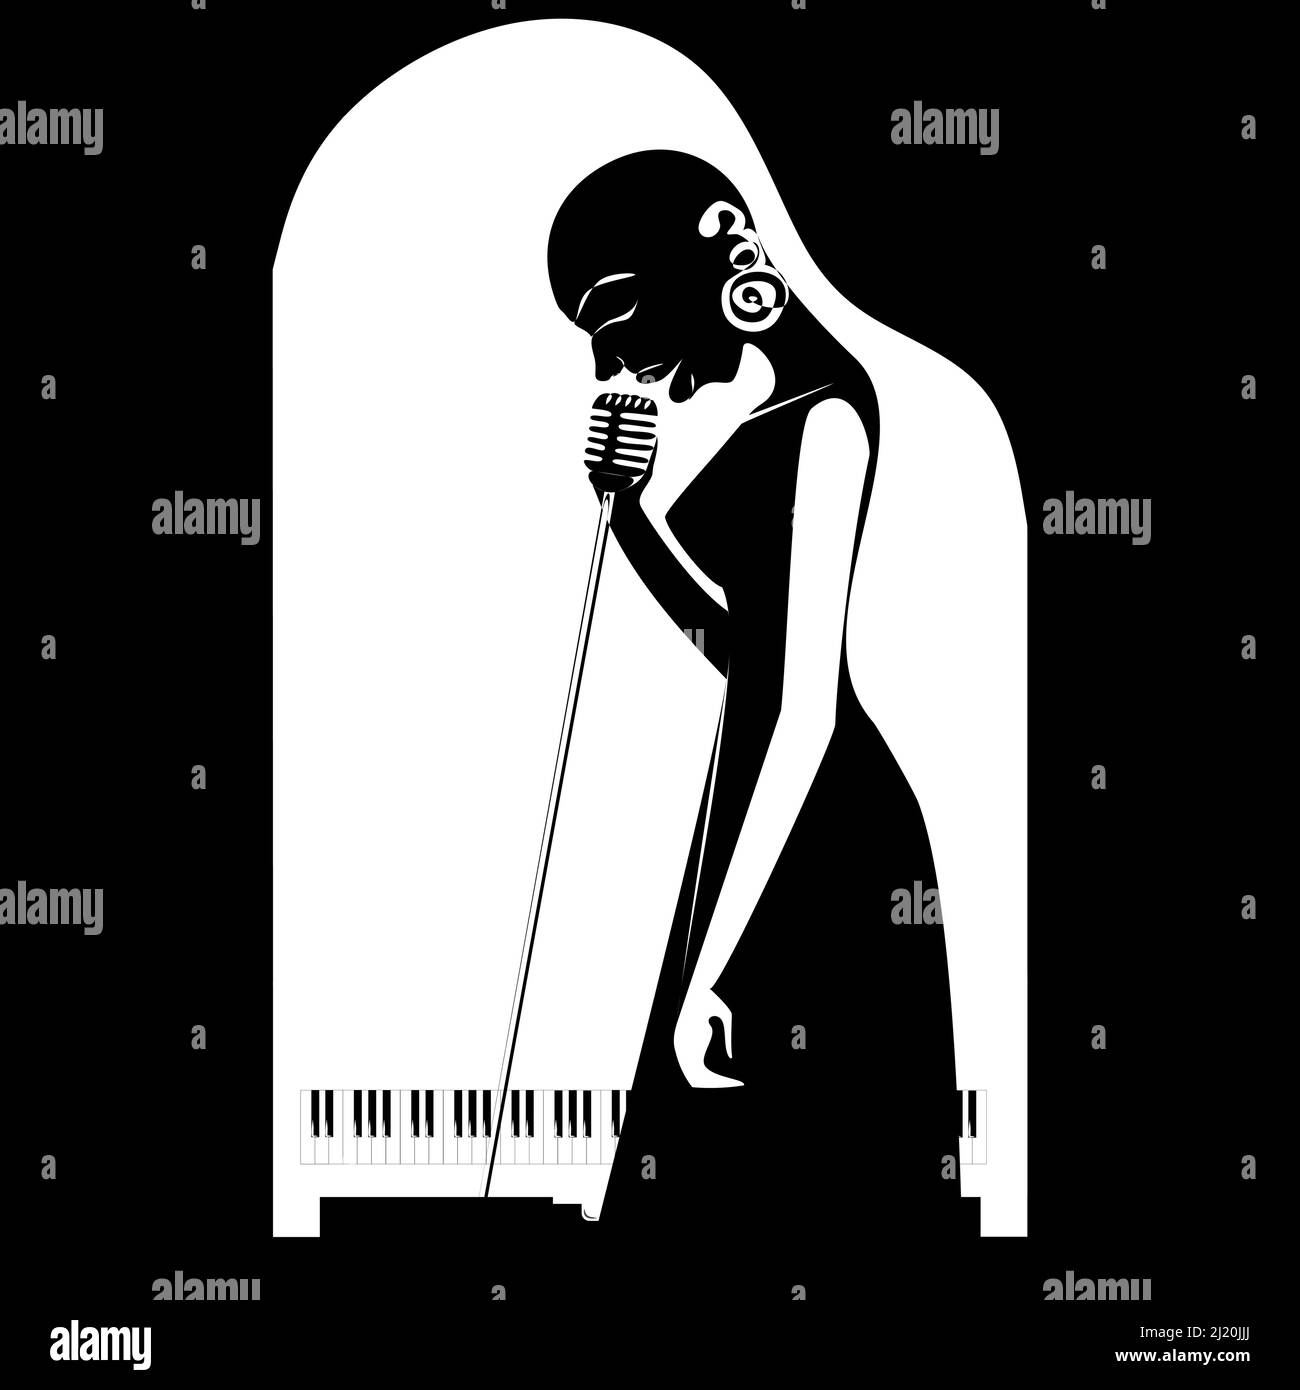 jazz singer silhouette